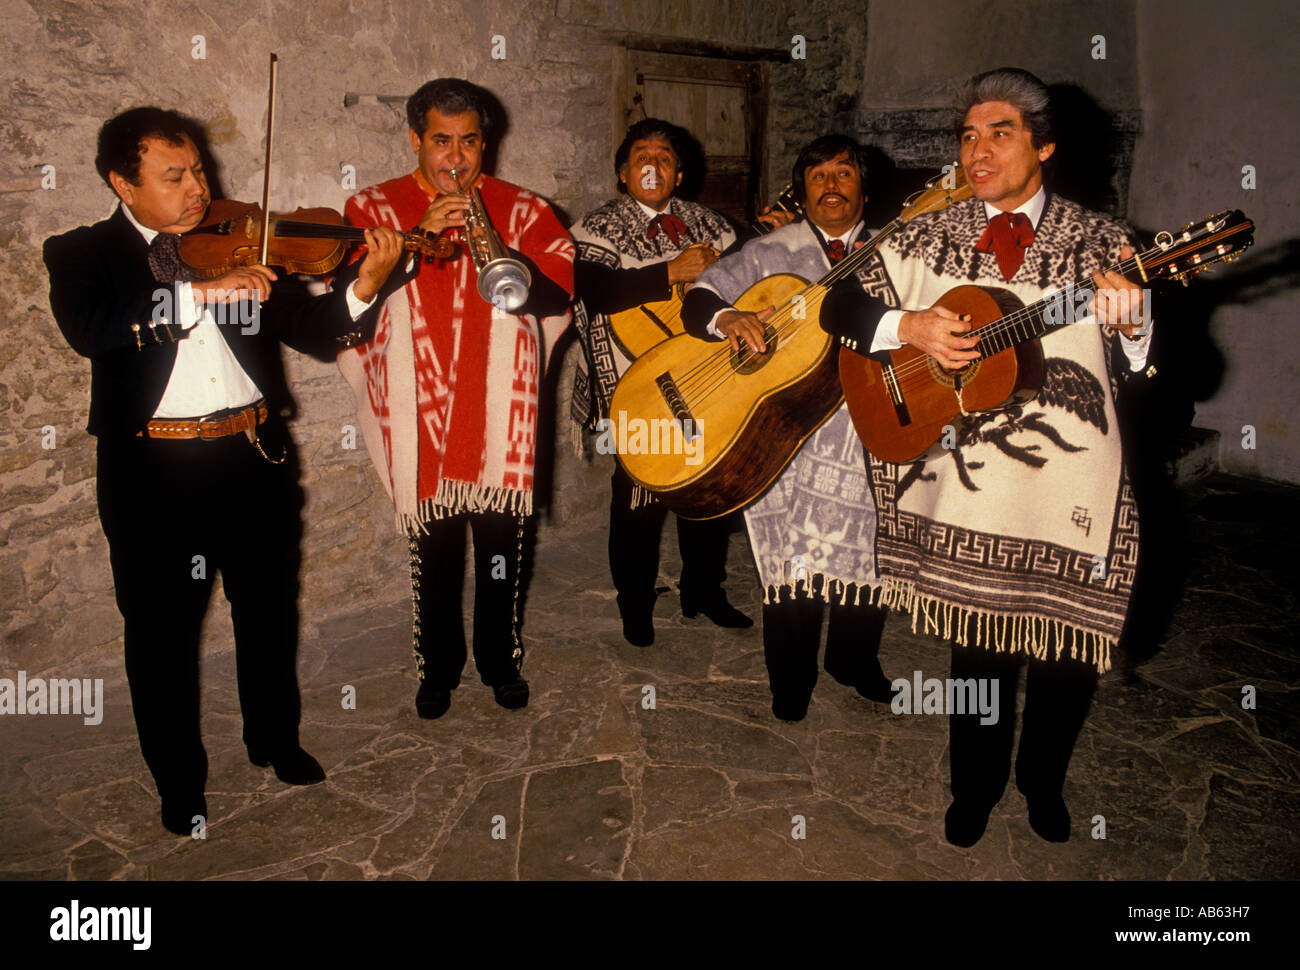 Mexikanisch-amerikanischen Männer, spielen Gitarre, Gitarristen, Gitarristen, Mariachi-Band, band Mitglieder, San Antonio, Texas, USA, Nordamerika Stockfoto